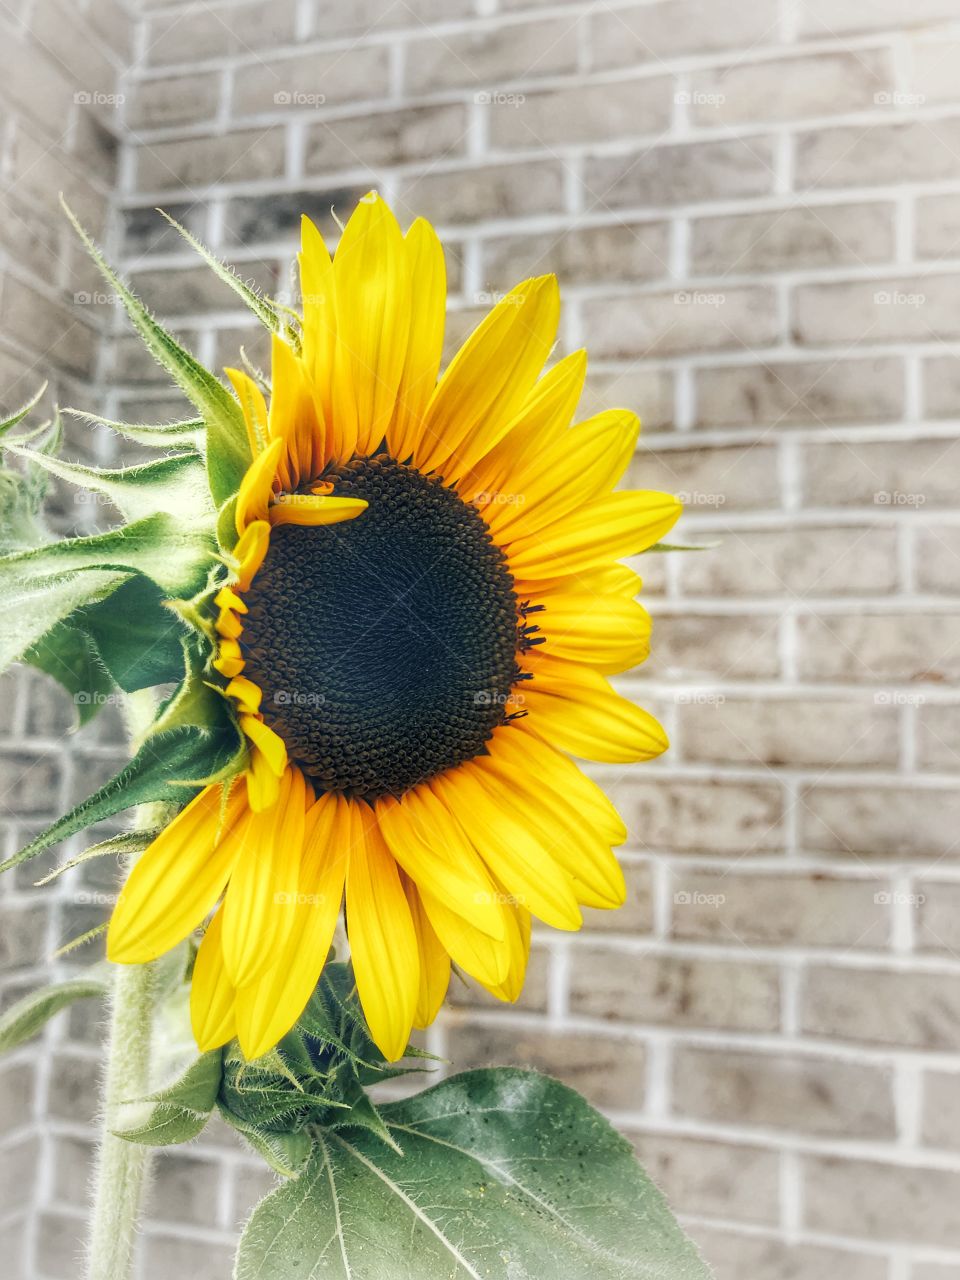 Sunflower just bloomed 👏🏻